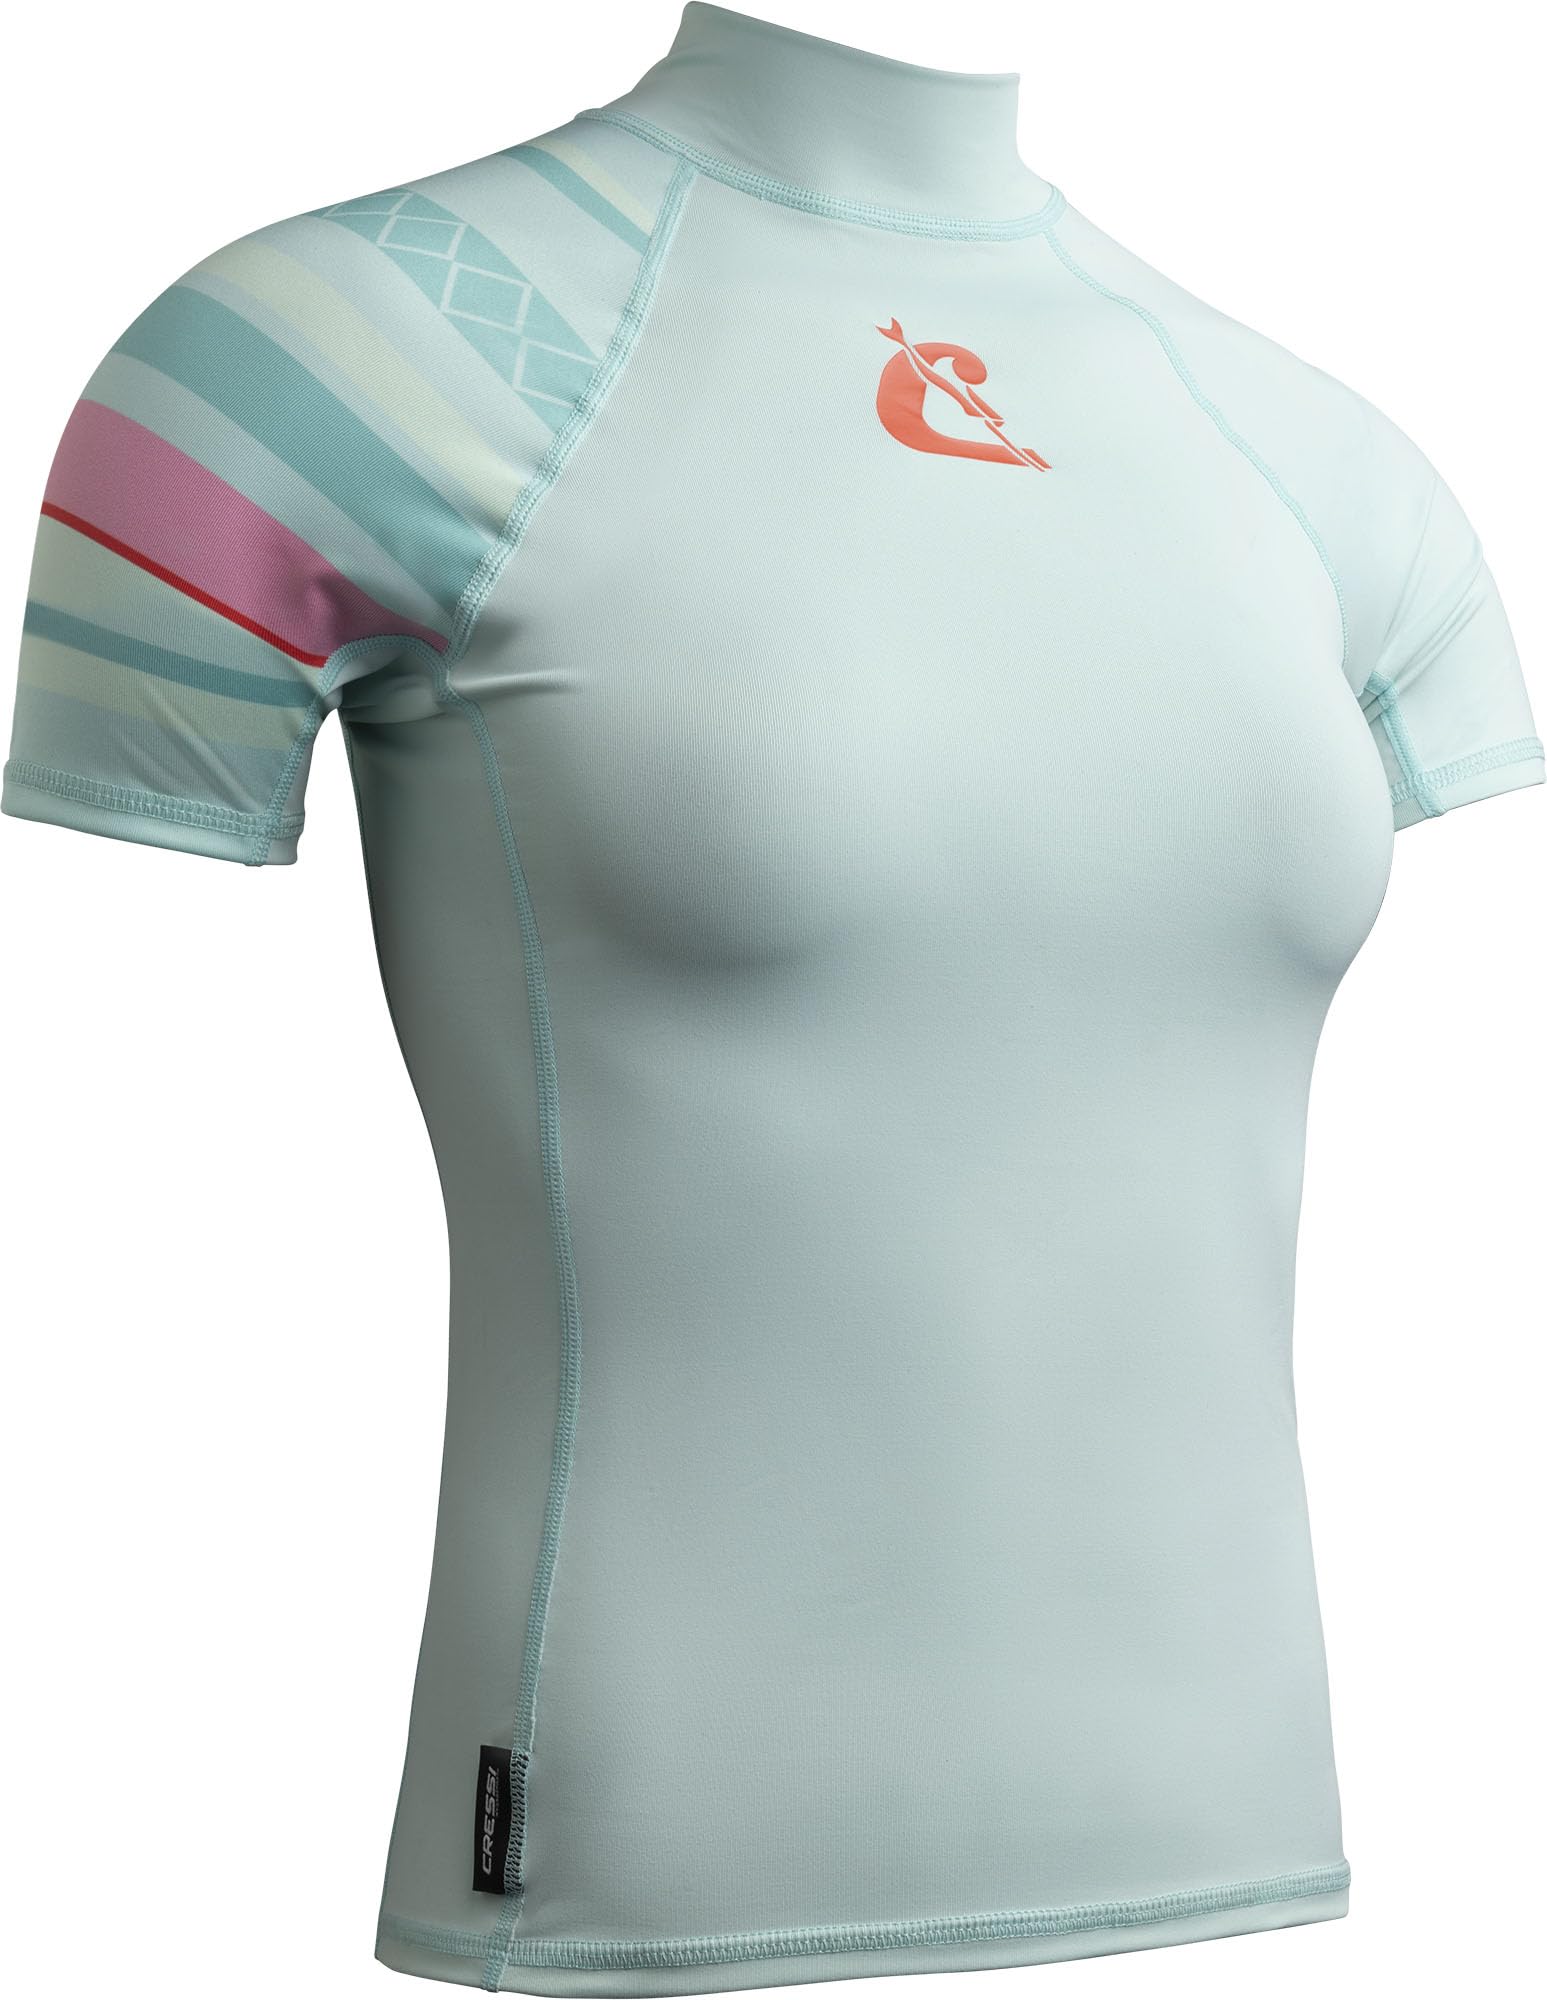 Cressi Shield Lady Rash Guard Short/SL - Protective Short Sleeve Rash Guard für SUP und Wassersport, Aquamarin/Rosa, L/4, Frauen